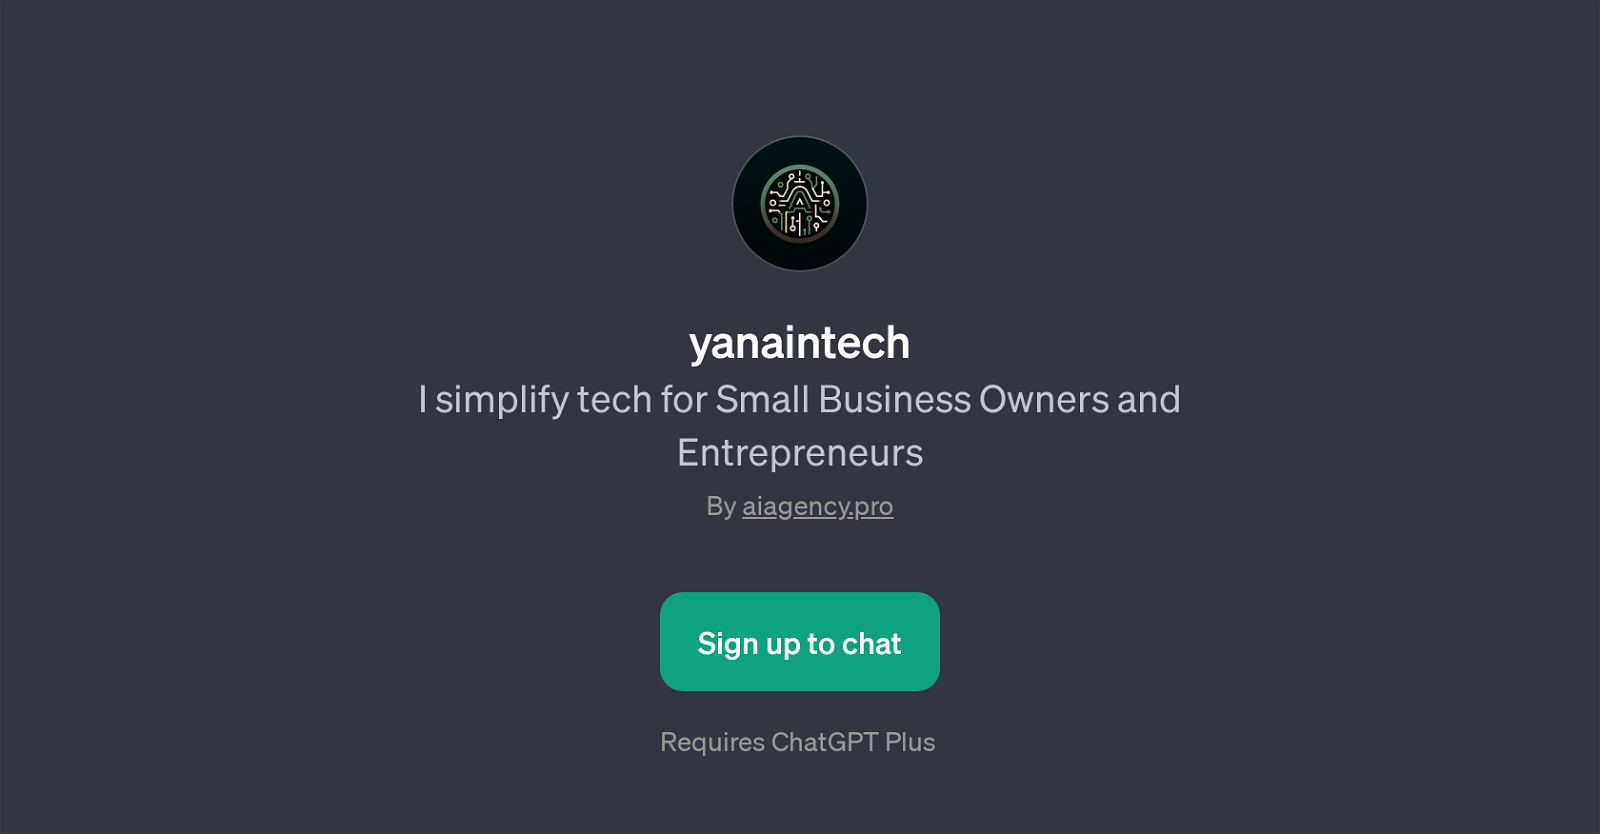 yanaintech website